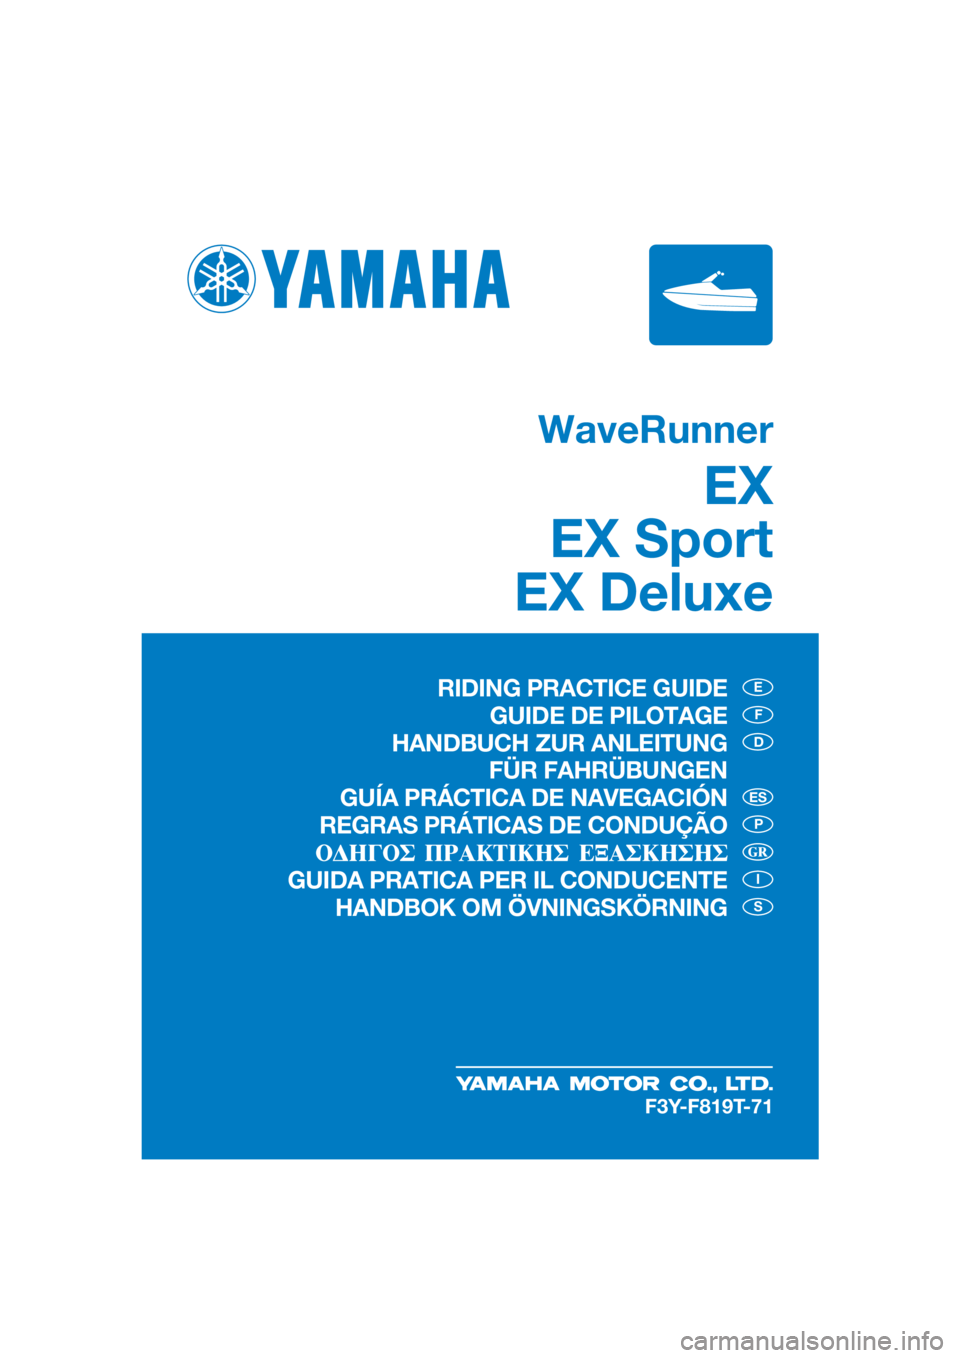 YAMAHA EX SPORT 2019  Manuale de Empleo (in Spanish) 